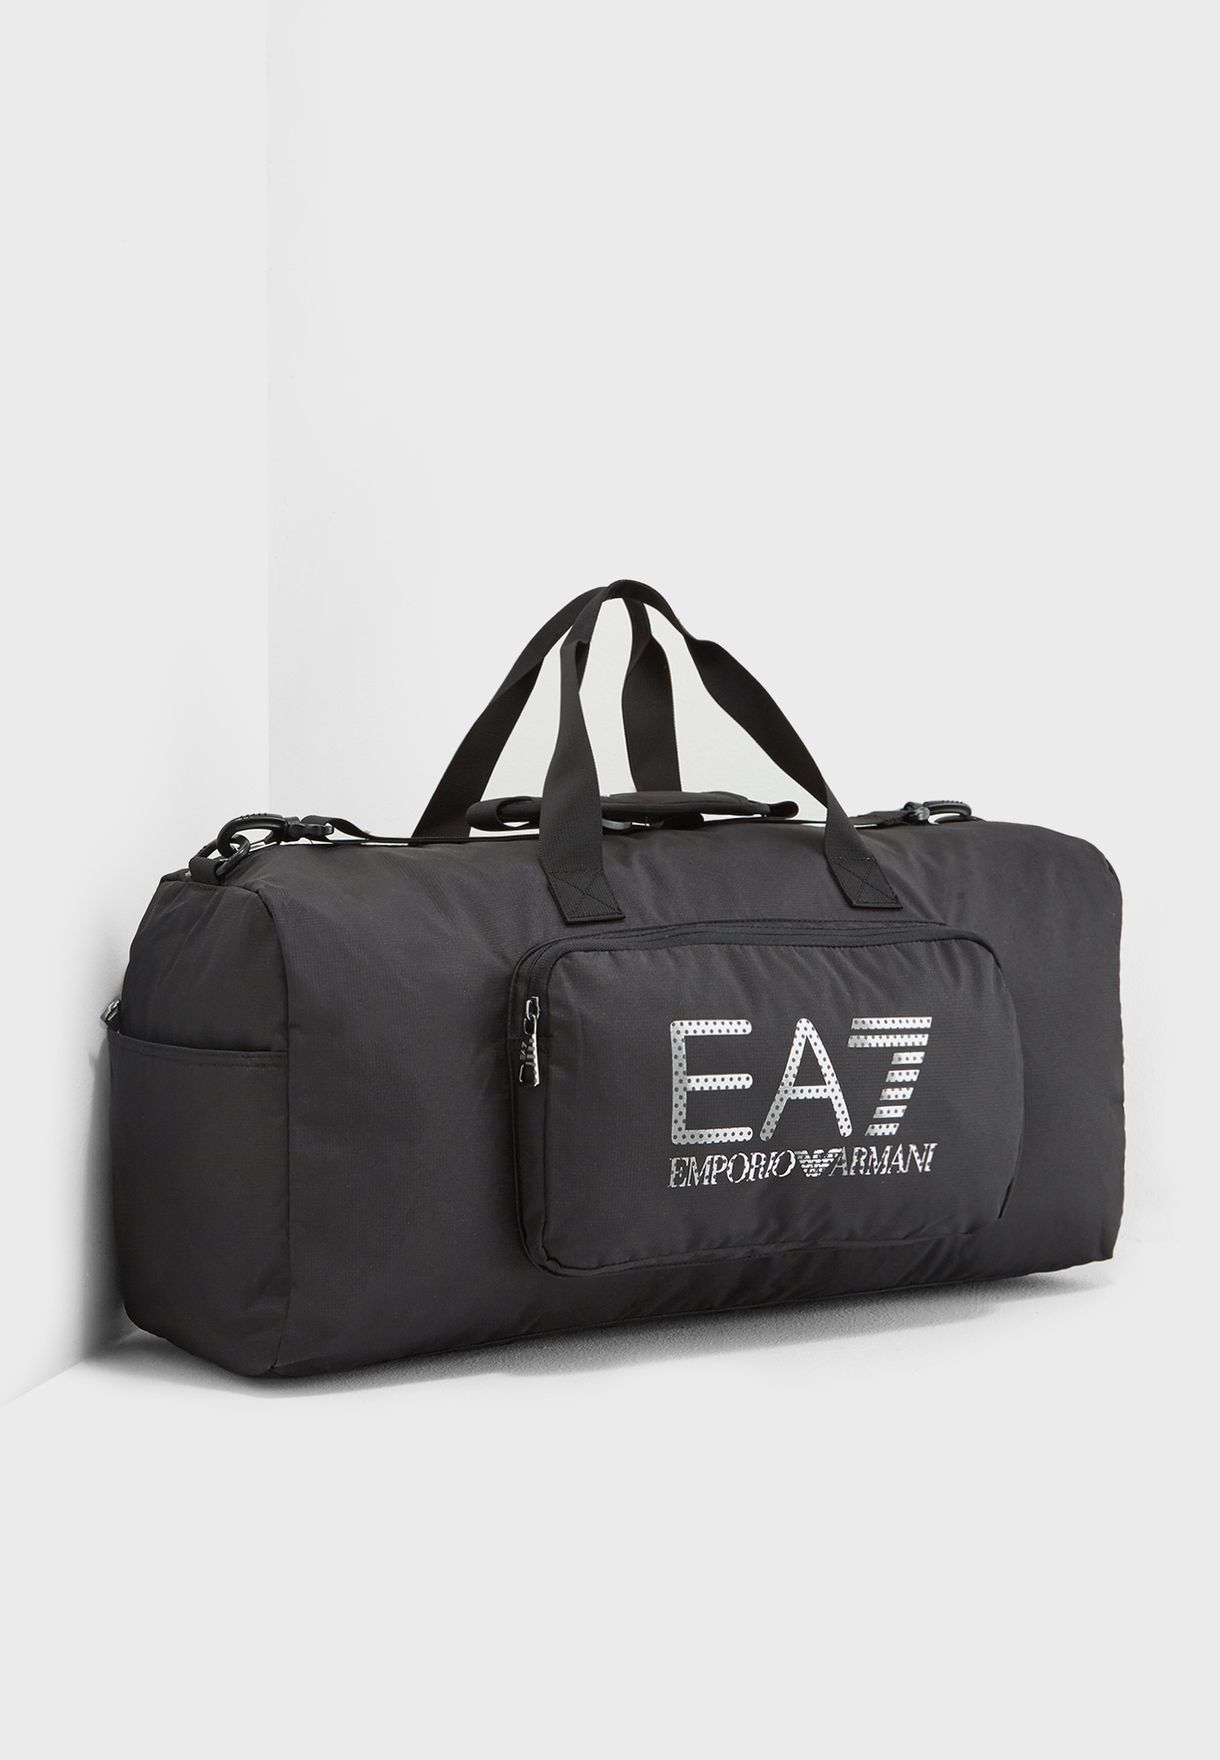 ea7 school bag